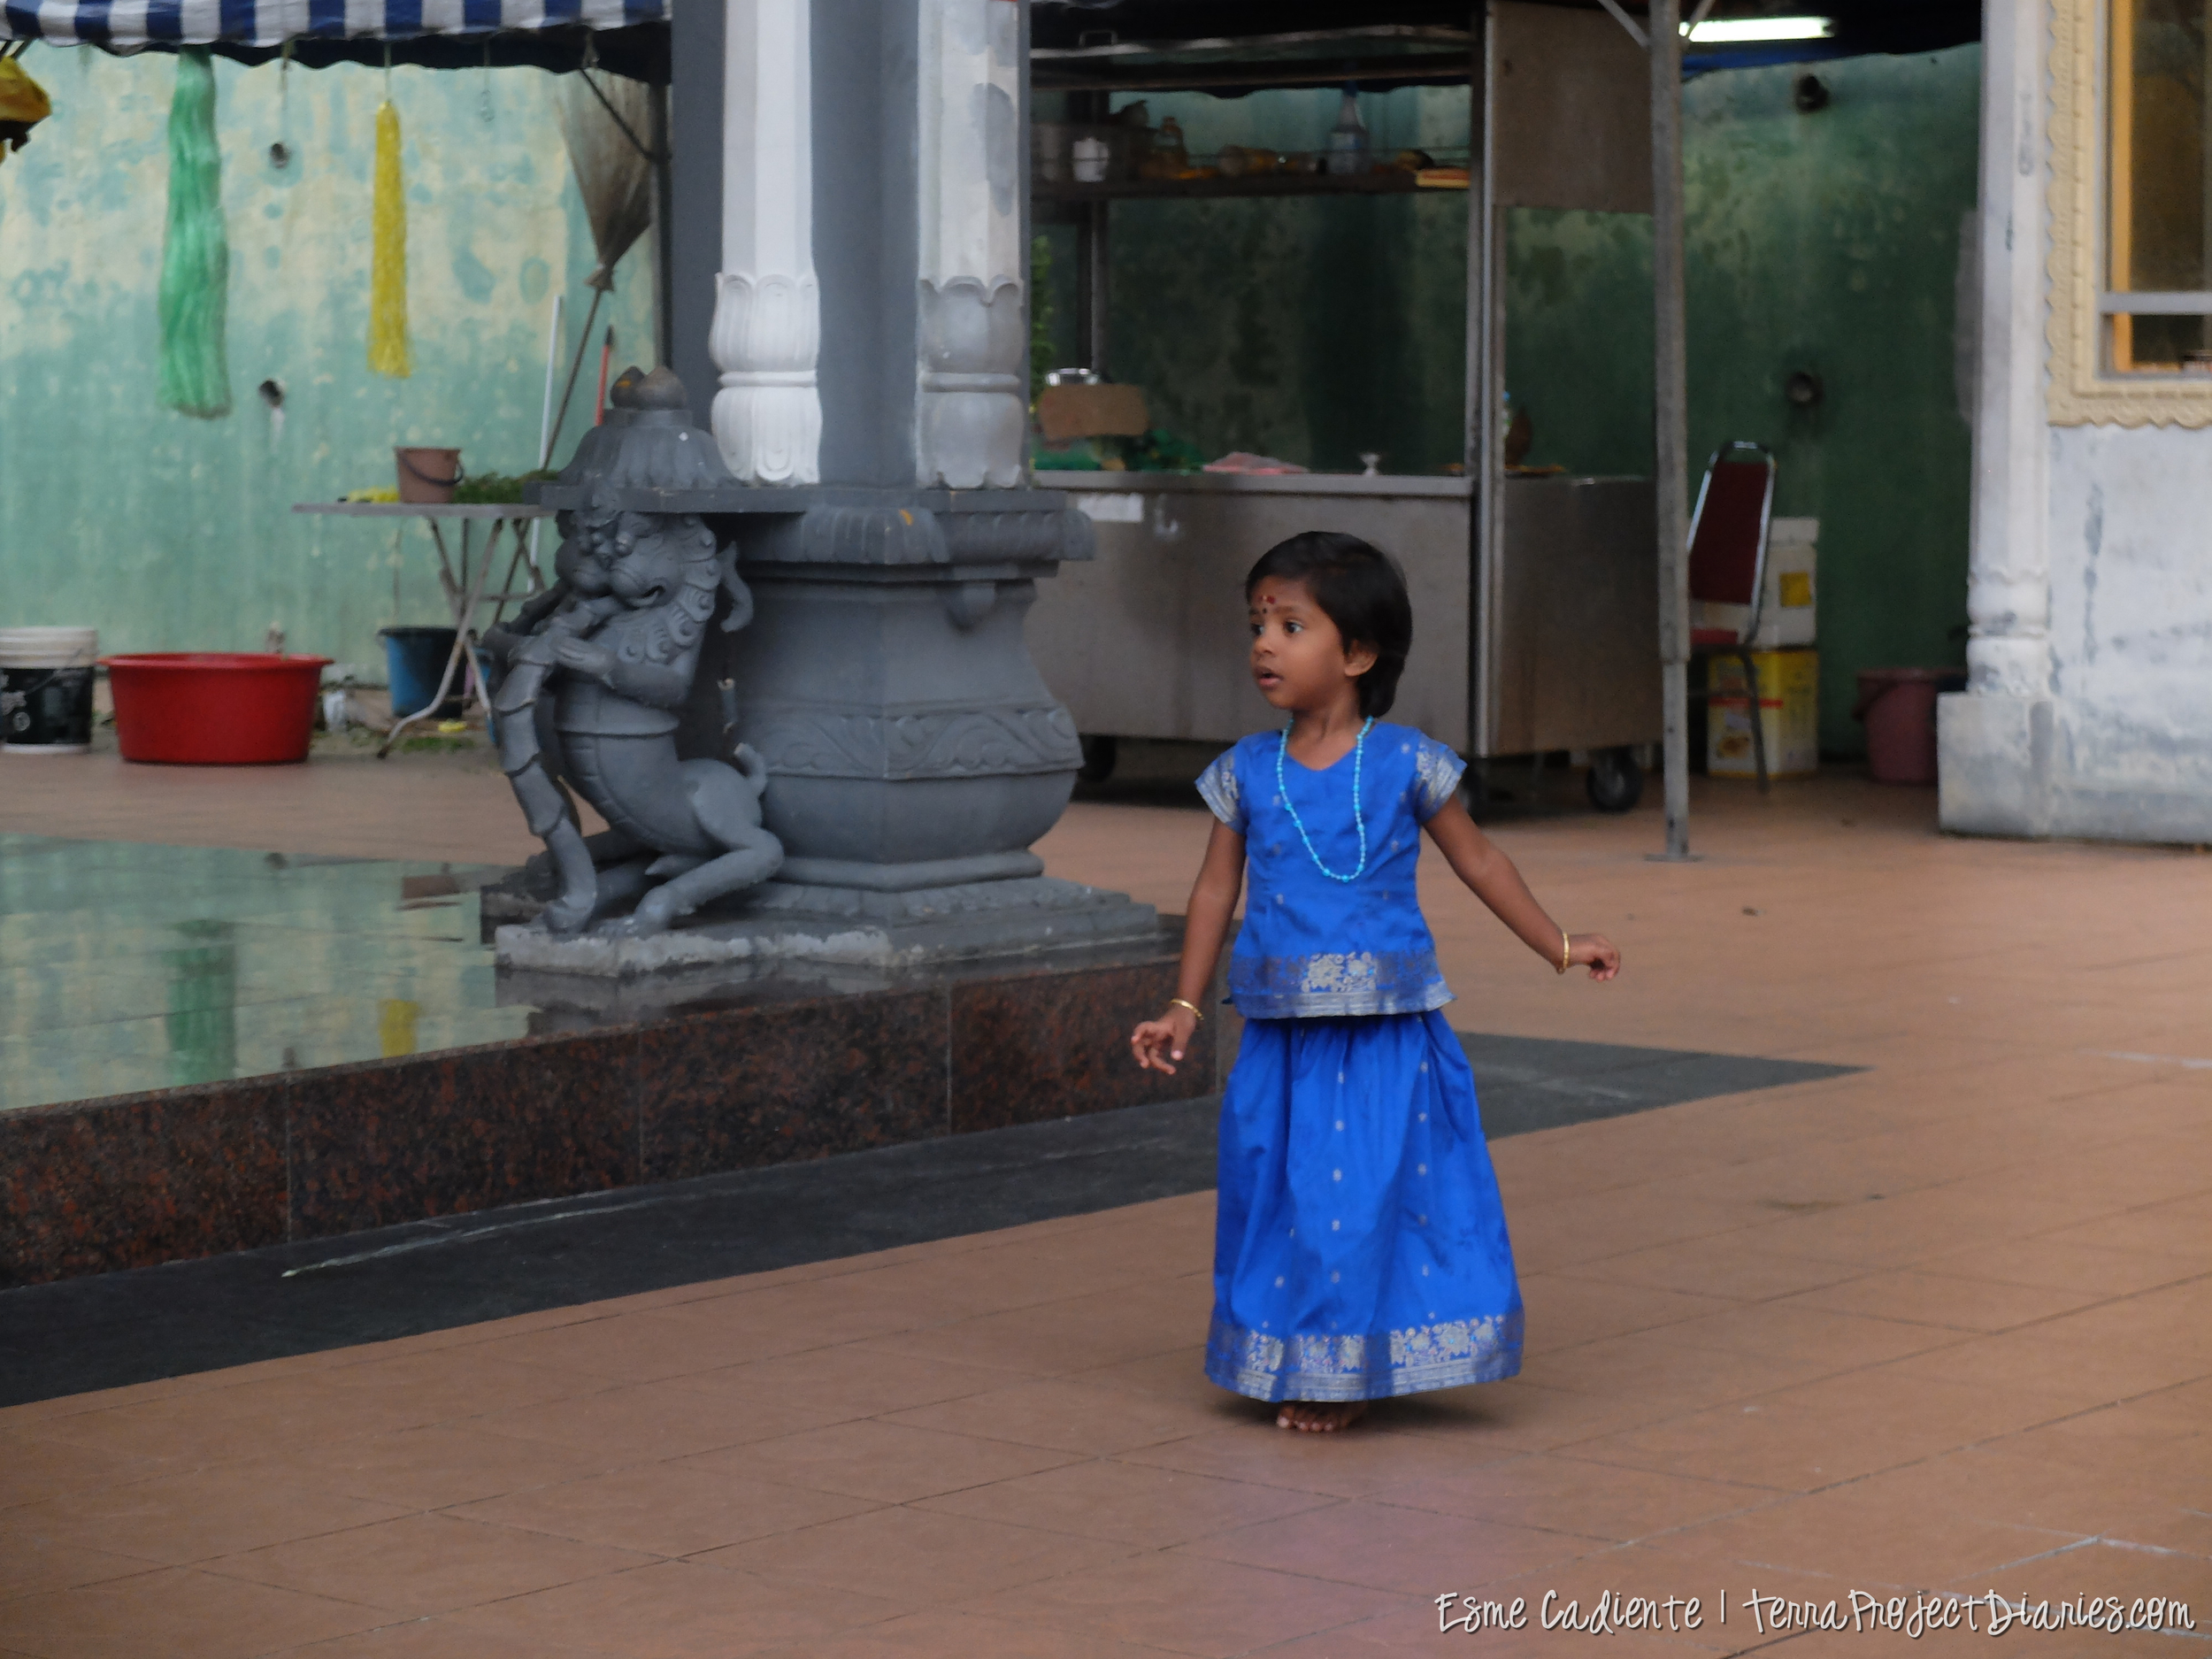 An Indian child runs around an Indian temple